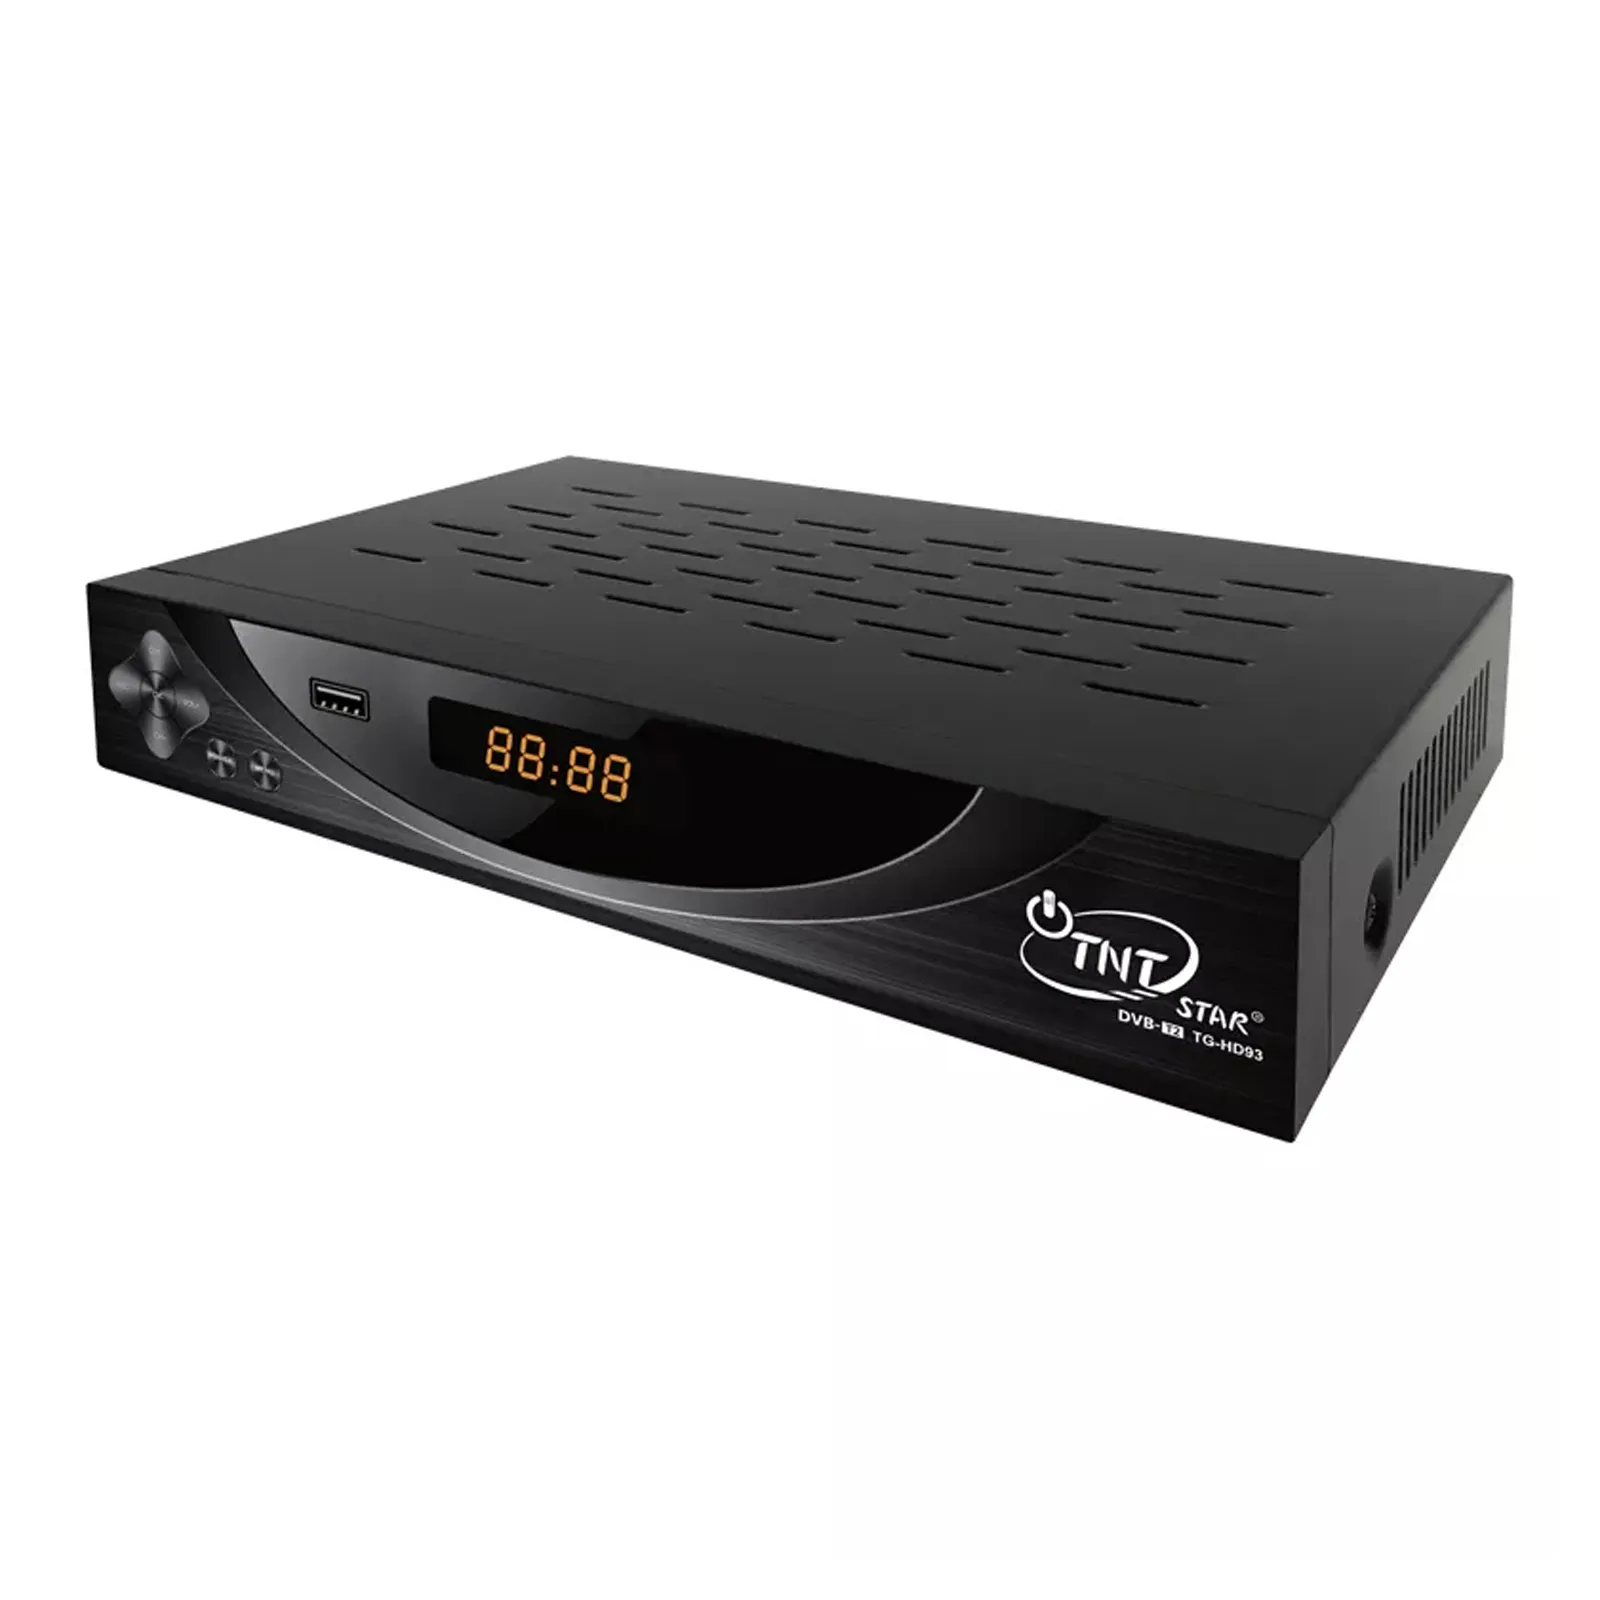 DVB T2 HD93 TNTSTAR dvb t2 रिसीवर अंड antenne dvb-t2 उच्च परिभाषा स्थलीय टीवी रिसीवर समर्थन EPG ओएसडी MPEG4 TimeShift